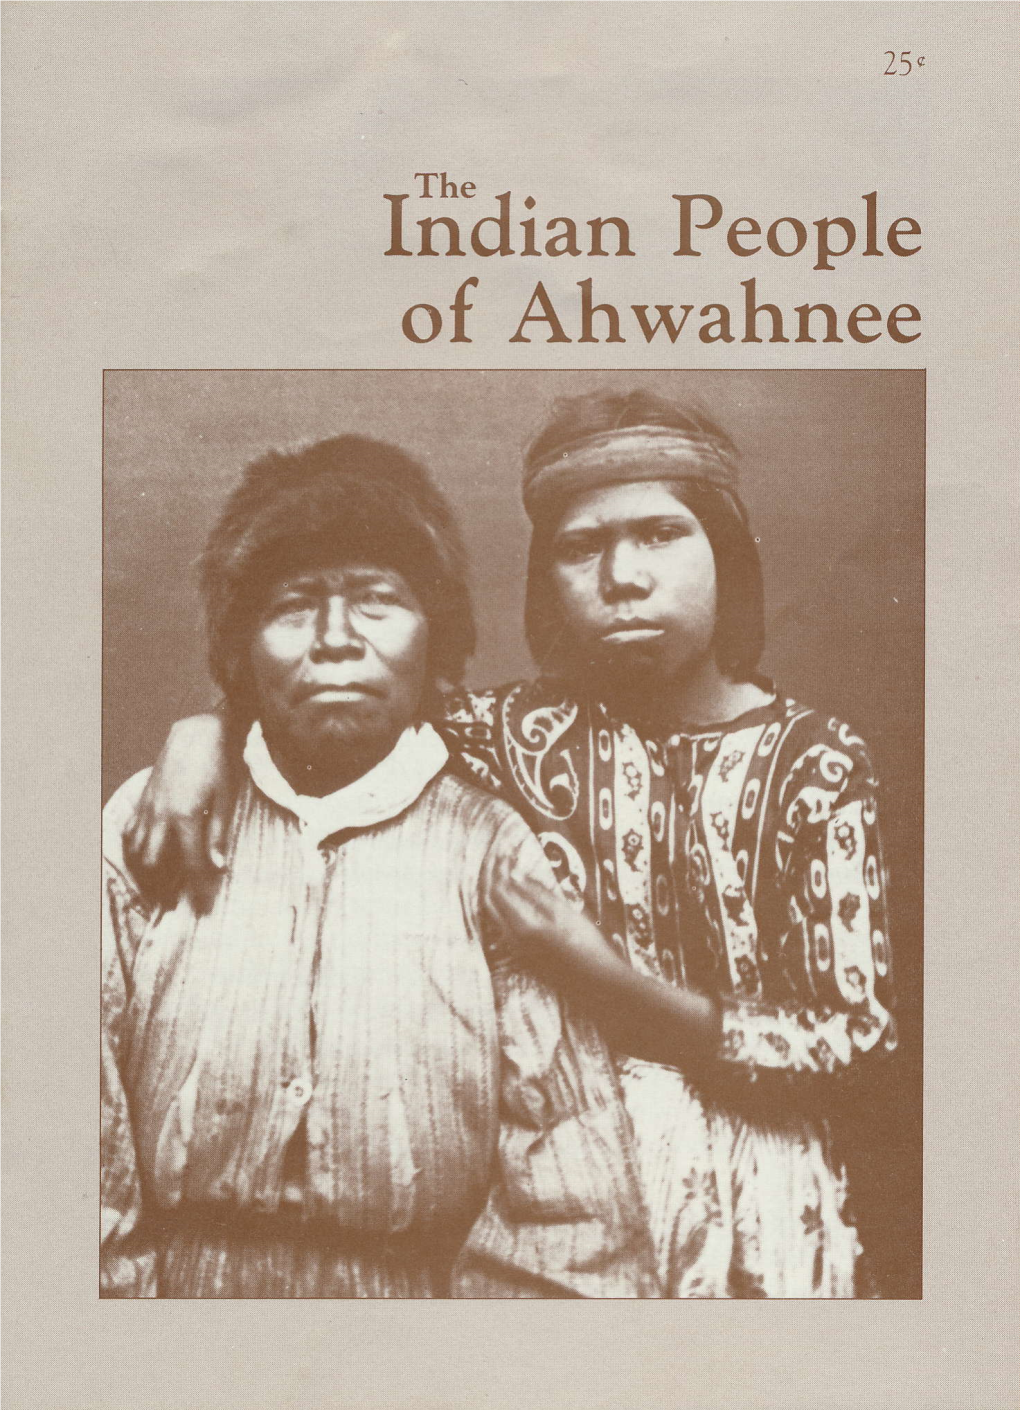 Illaian People of Ahwahnee